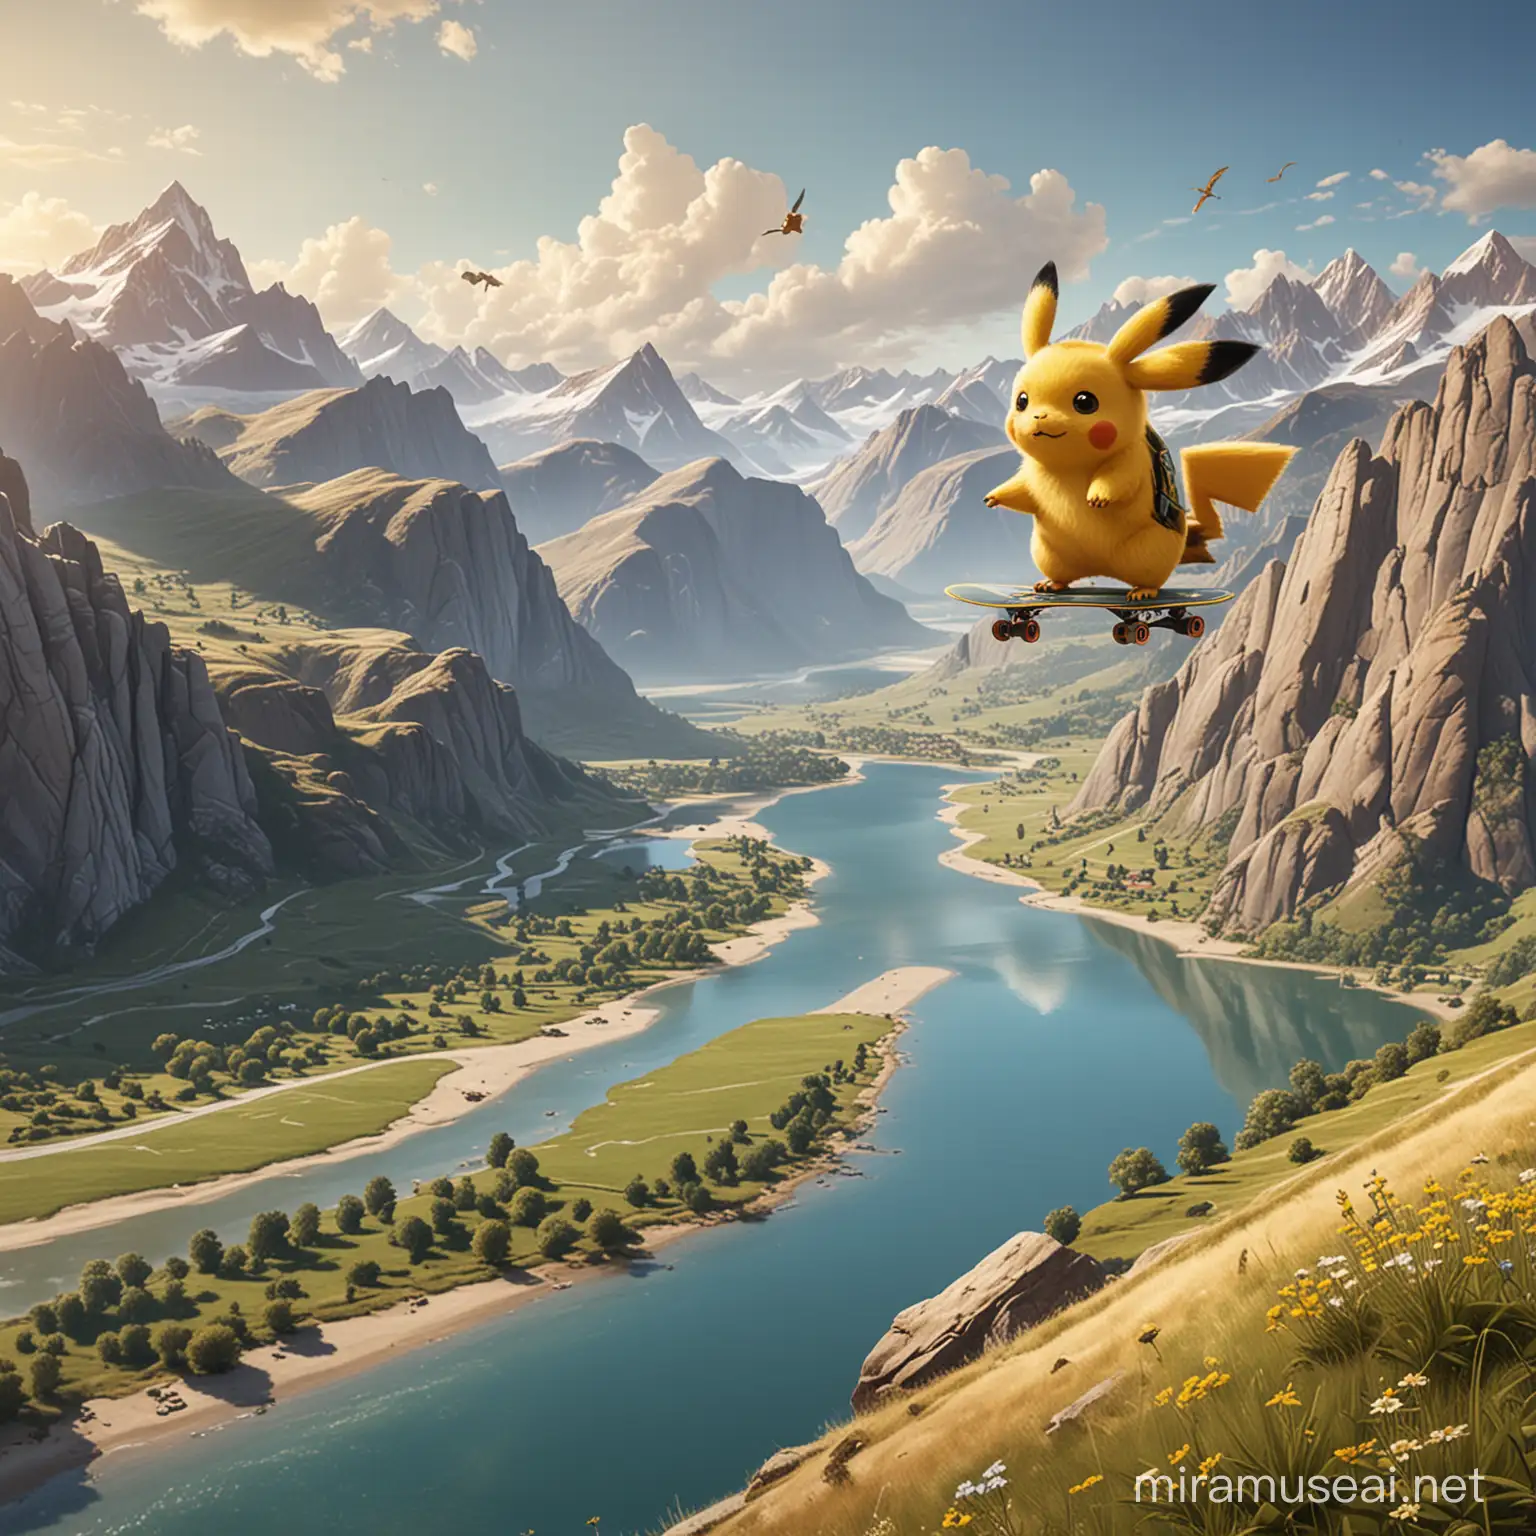 Pikachu Flying Over Majestic Mountain Landscape on Skateboard